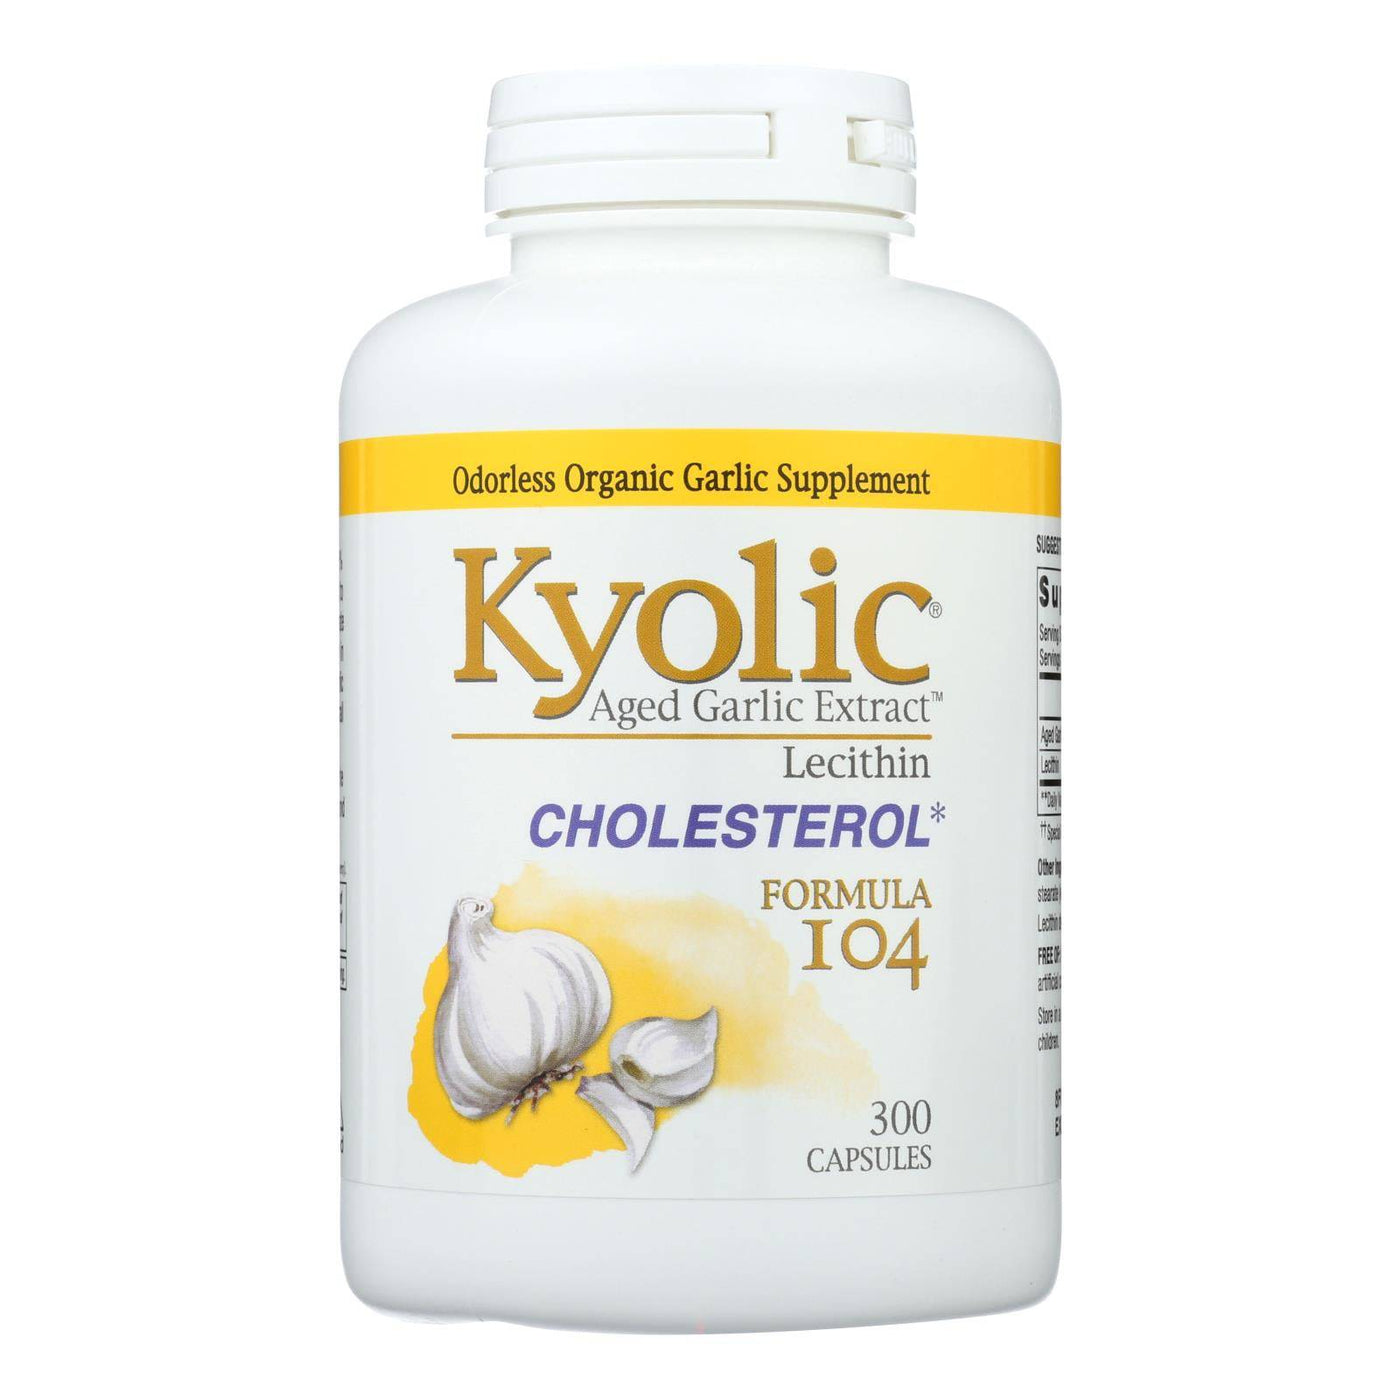 Kyolic - Aged Garlic Extract Cholesterol Formula 104 - 300 Capsules | OnlyNaturals.us